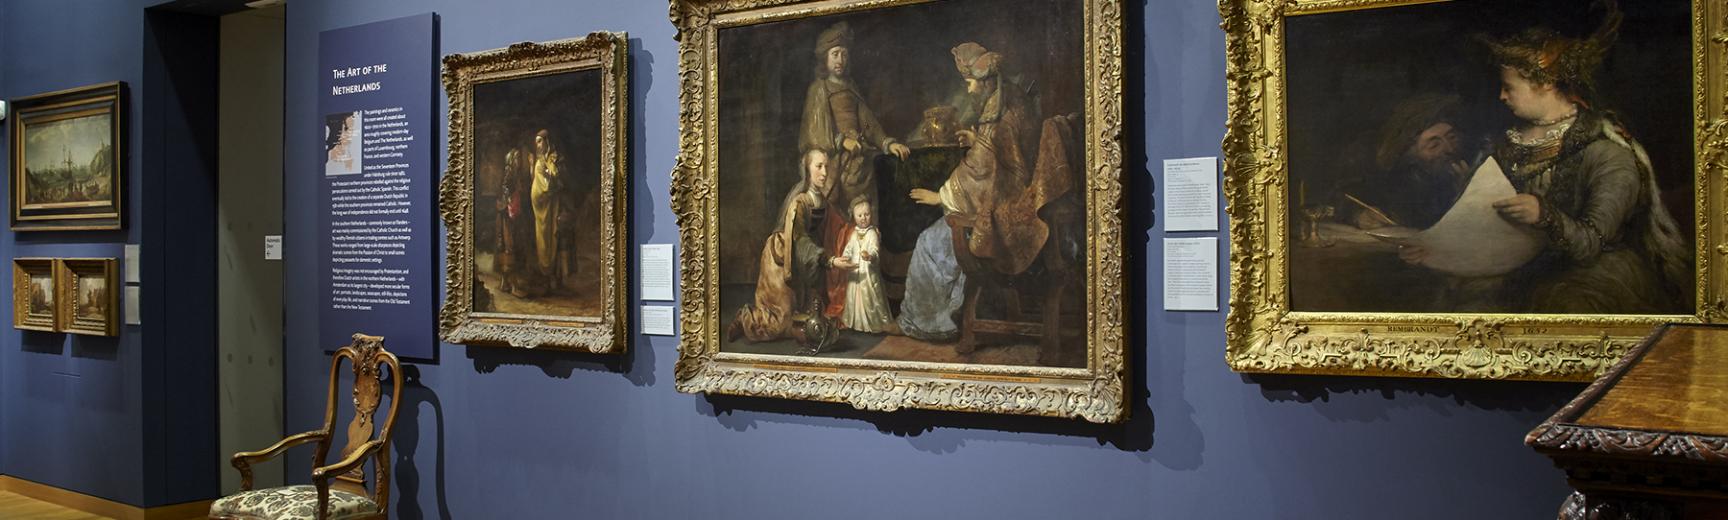 Dutch Art Gallery at the Ashmolean Museum